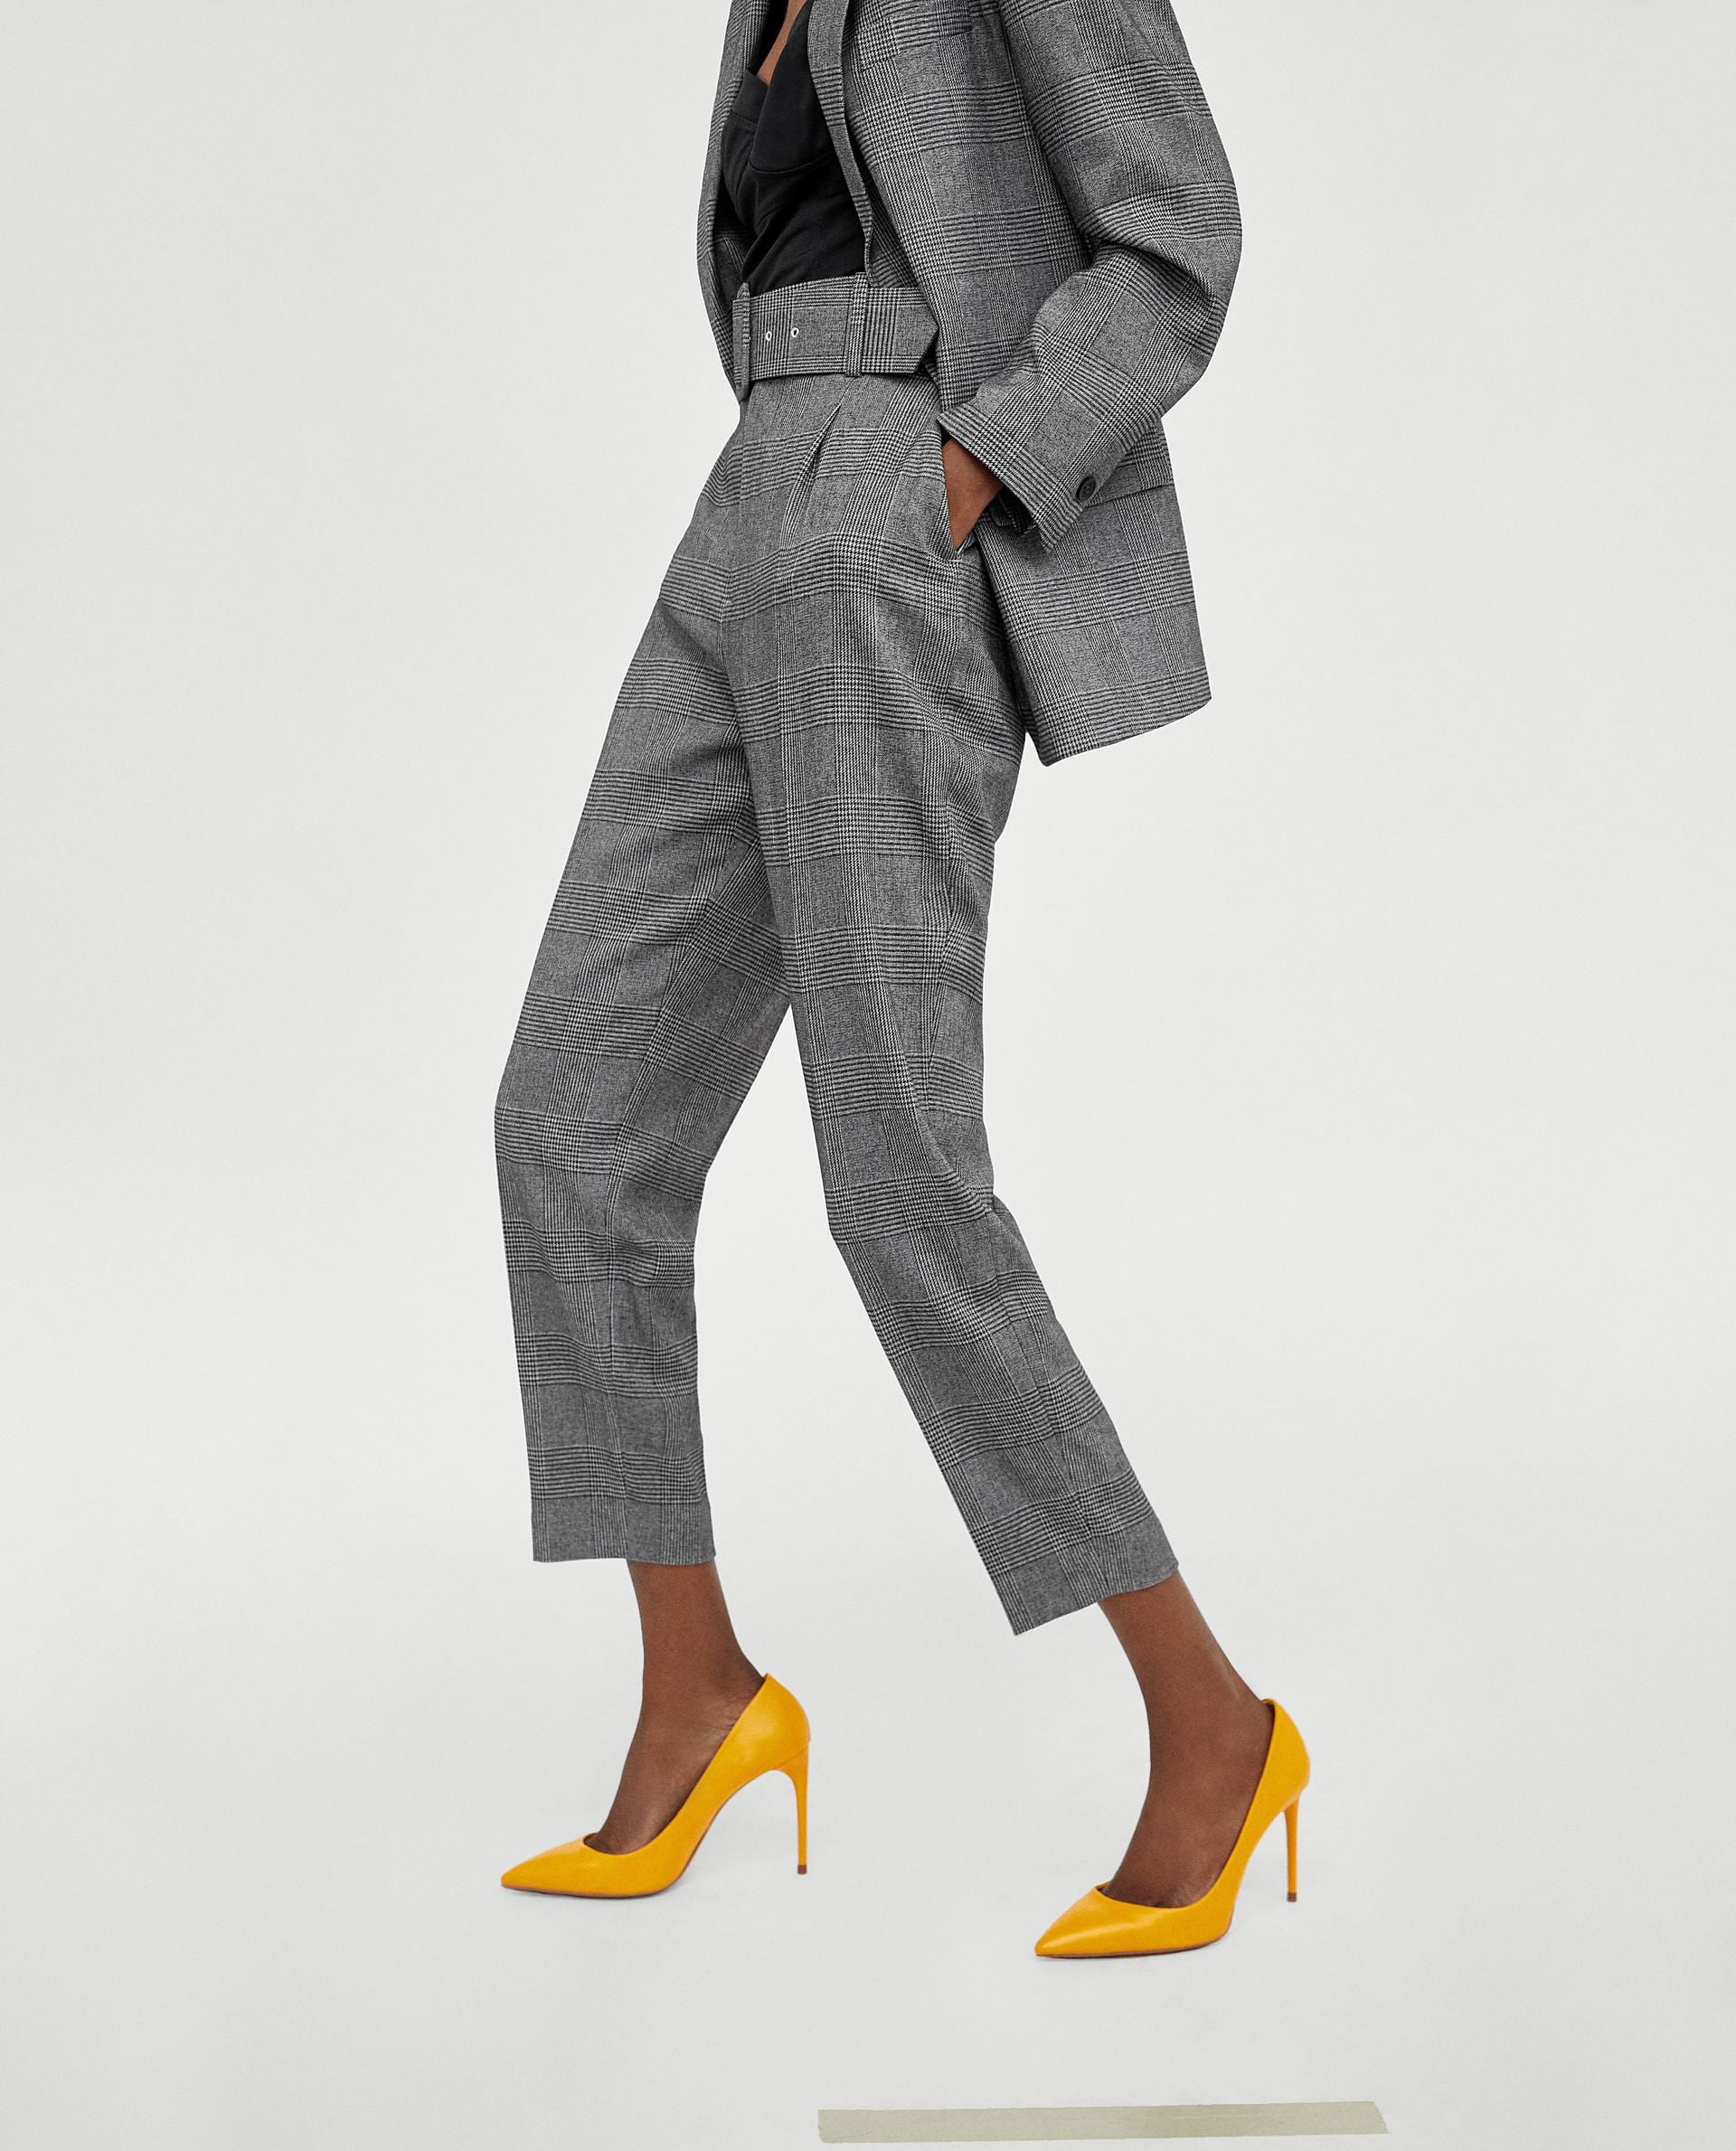 yellow and gray heels